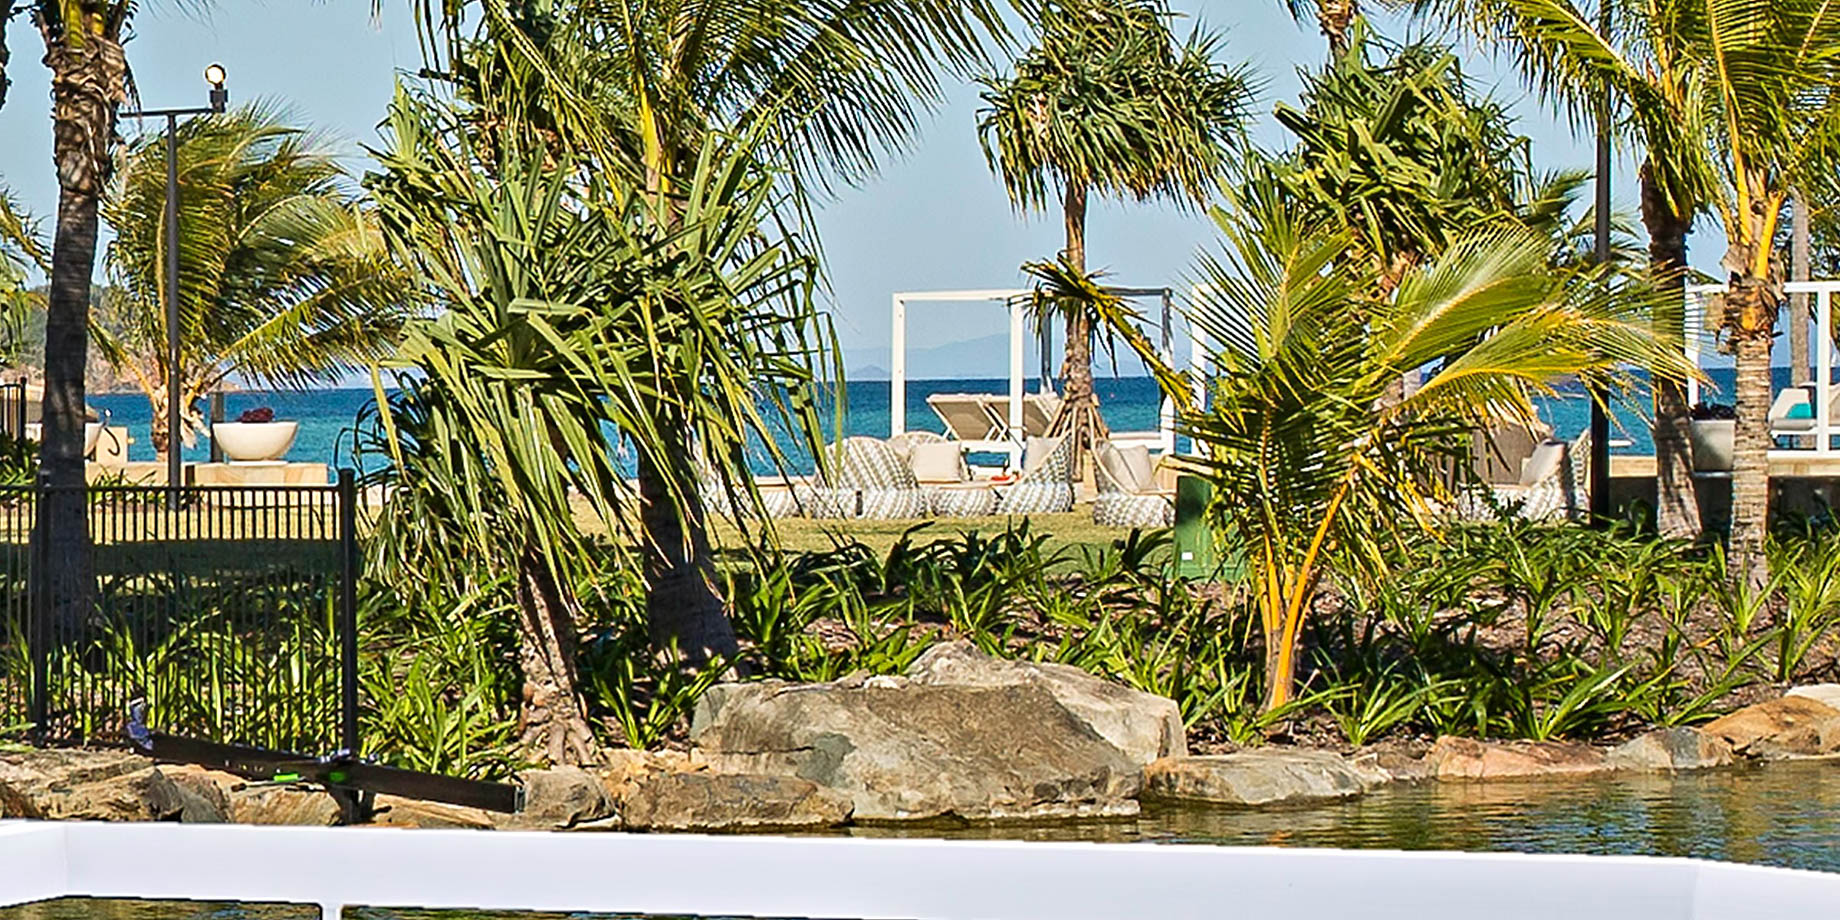 InterContinental Hayman Island Resort - Whitsunday Islands, Australia - Hayman Resort Lagoon View